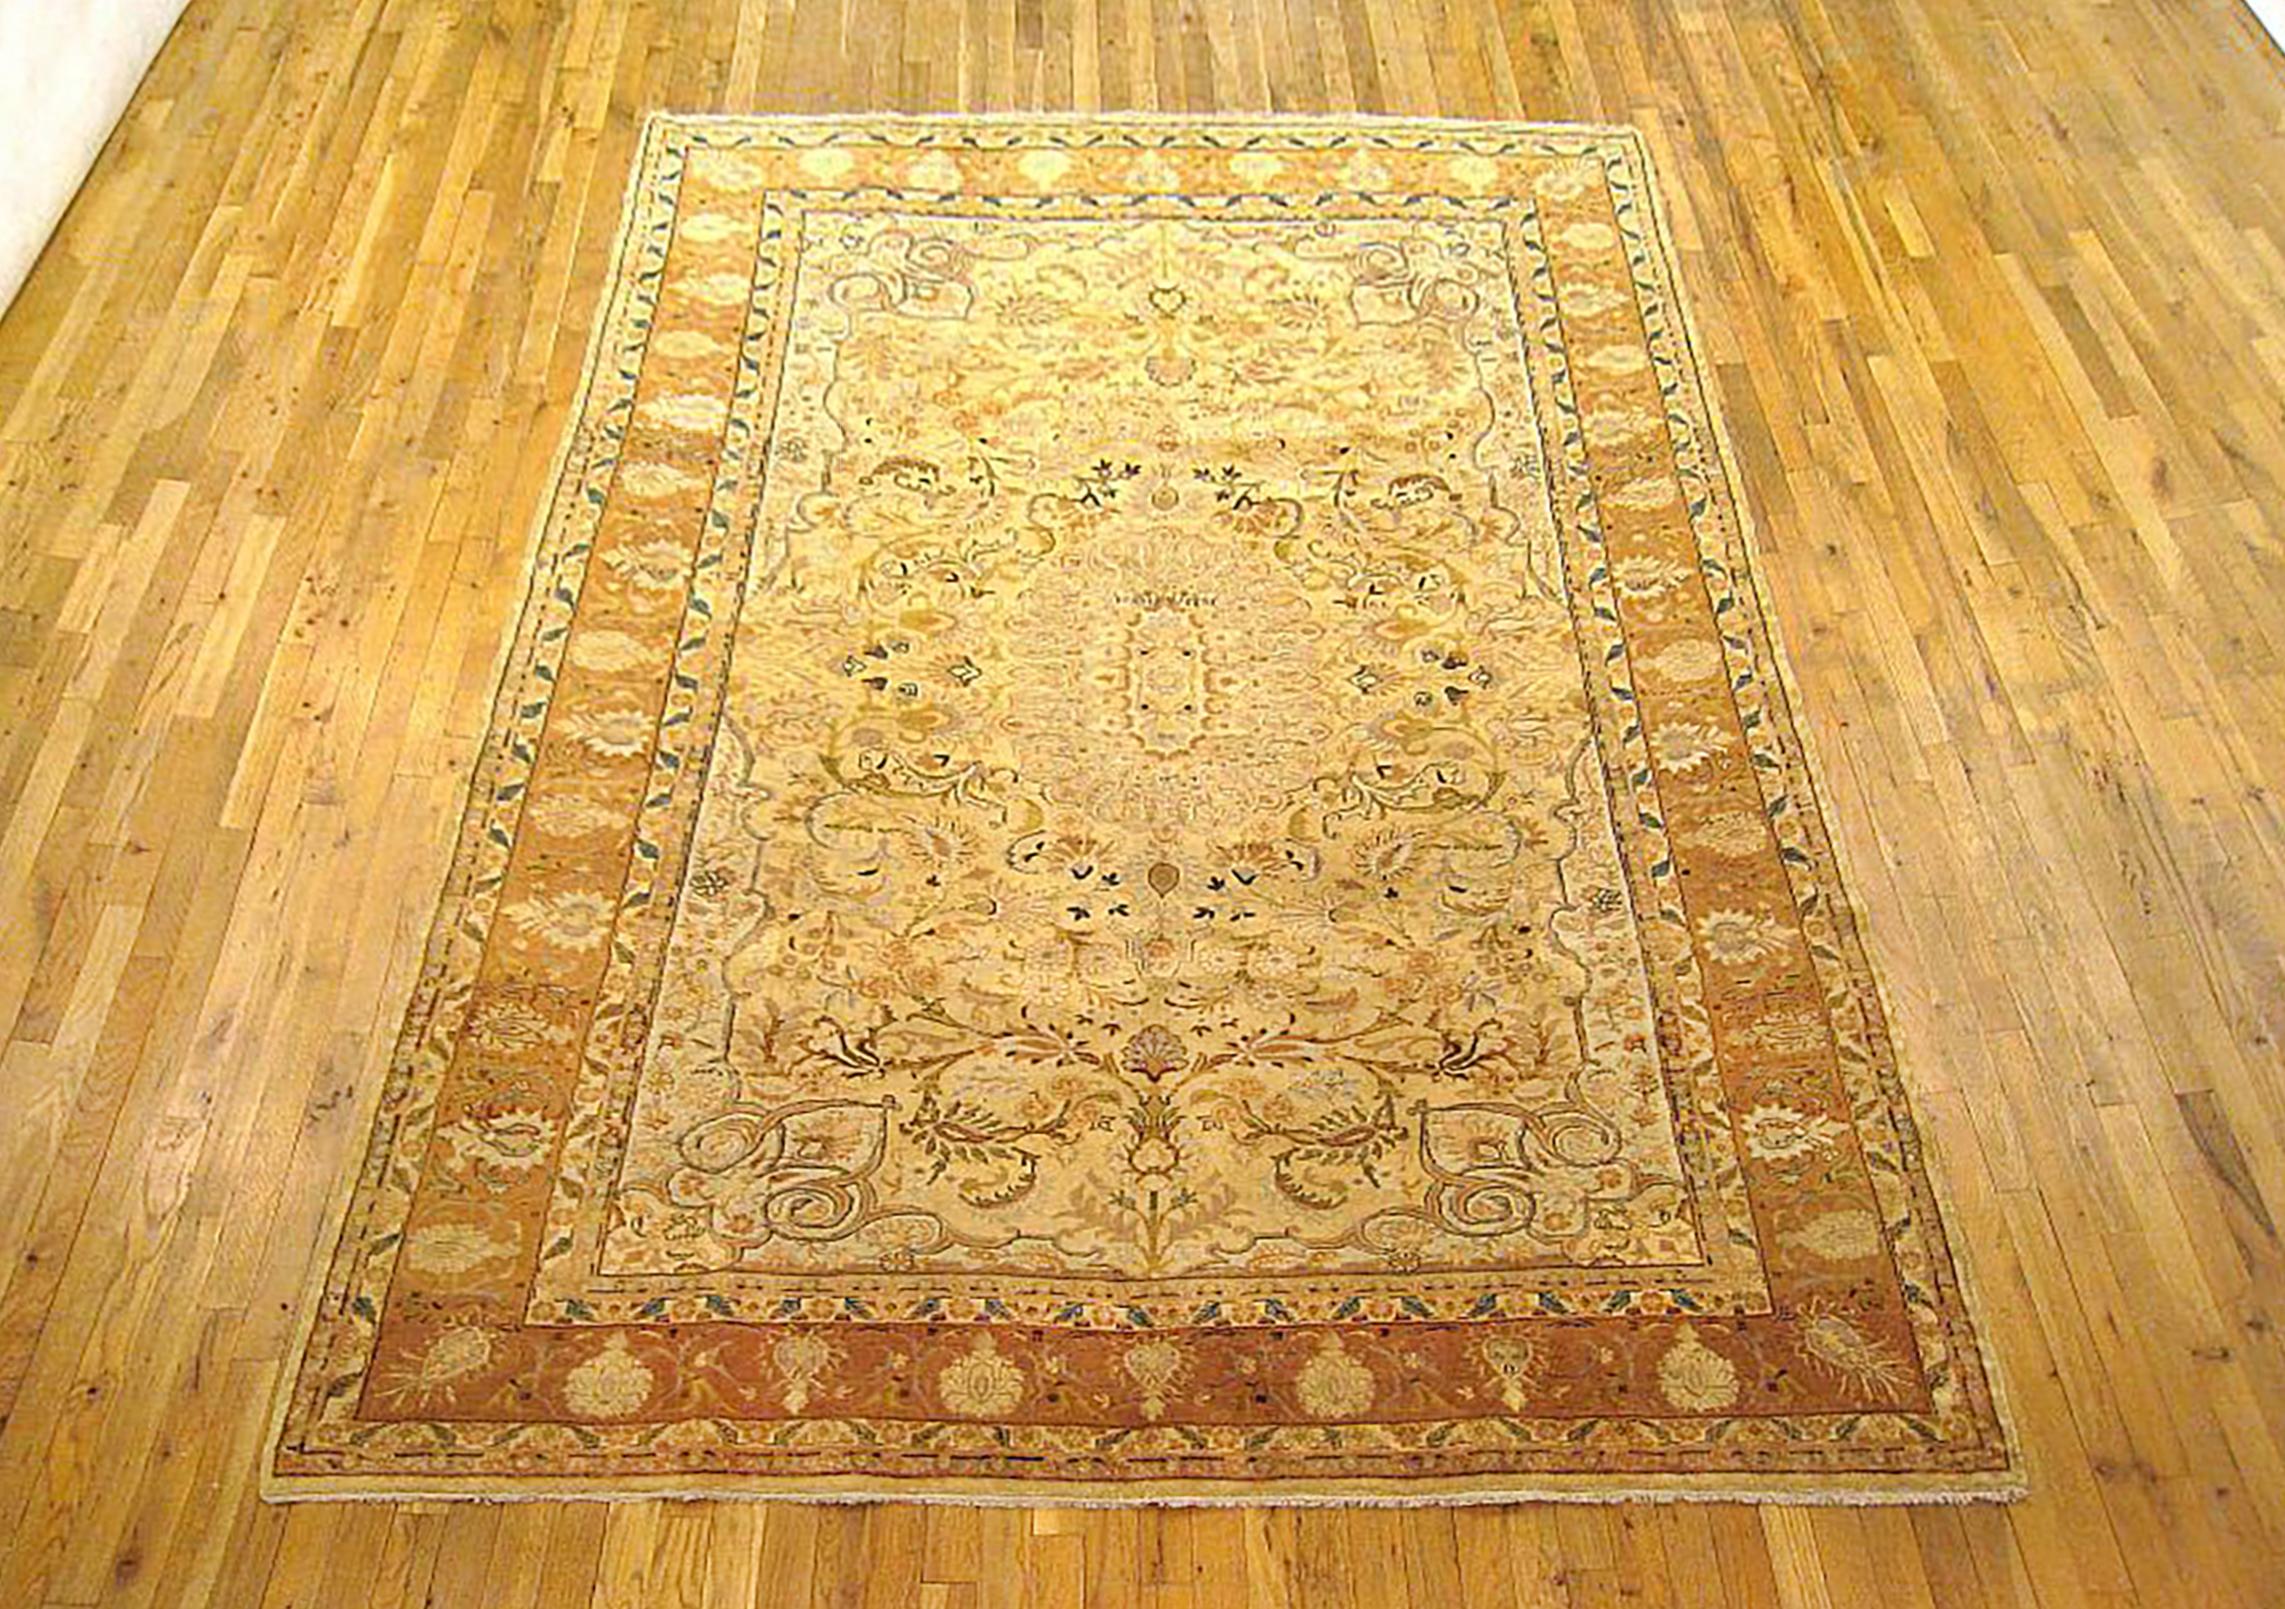 Antique Perisan Tabriz  Oriental Carpet, circa 1920, Room Sized

An antique Persian Tabriz oriental carpet, circa 1920. Size: 10'0